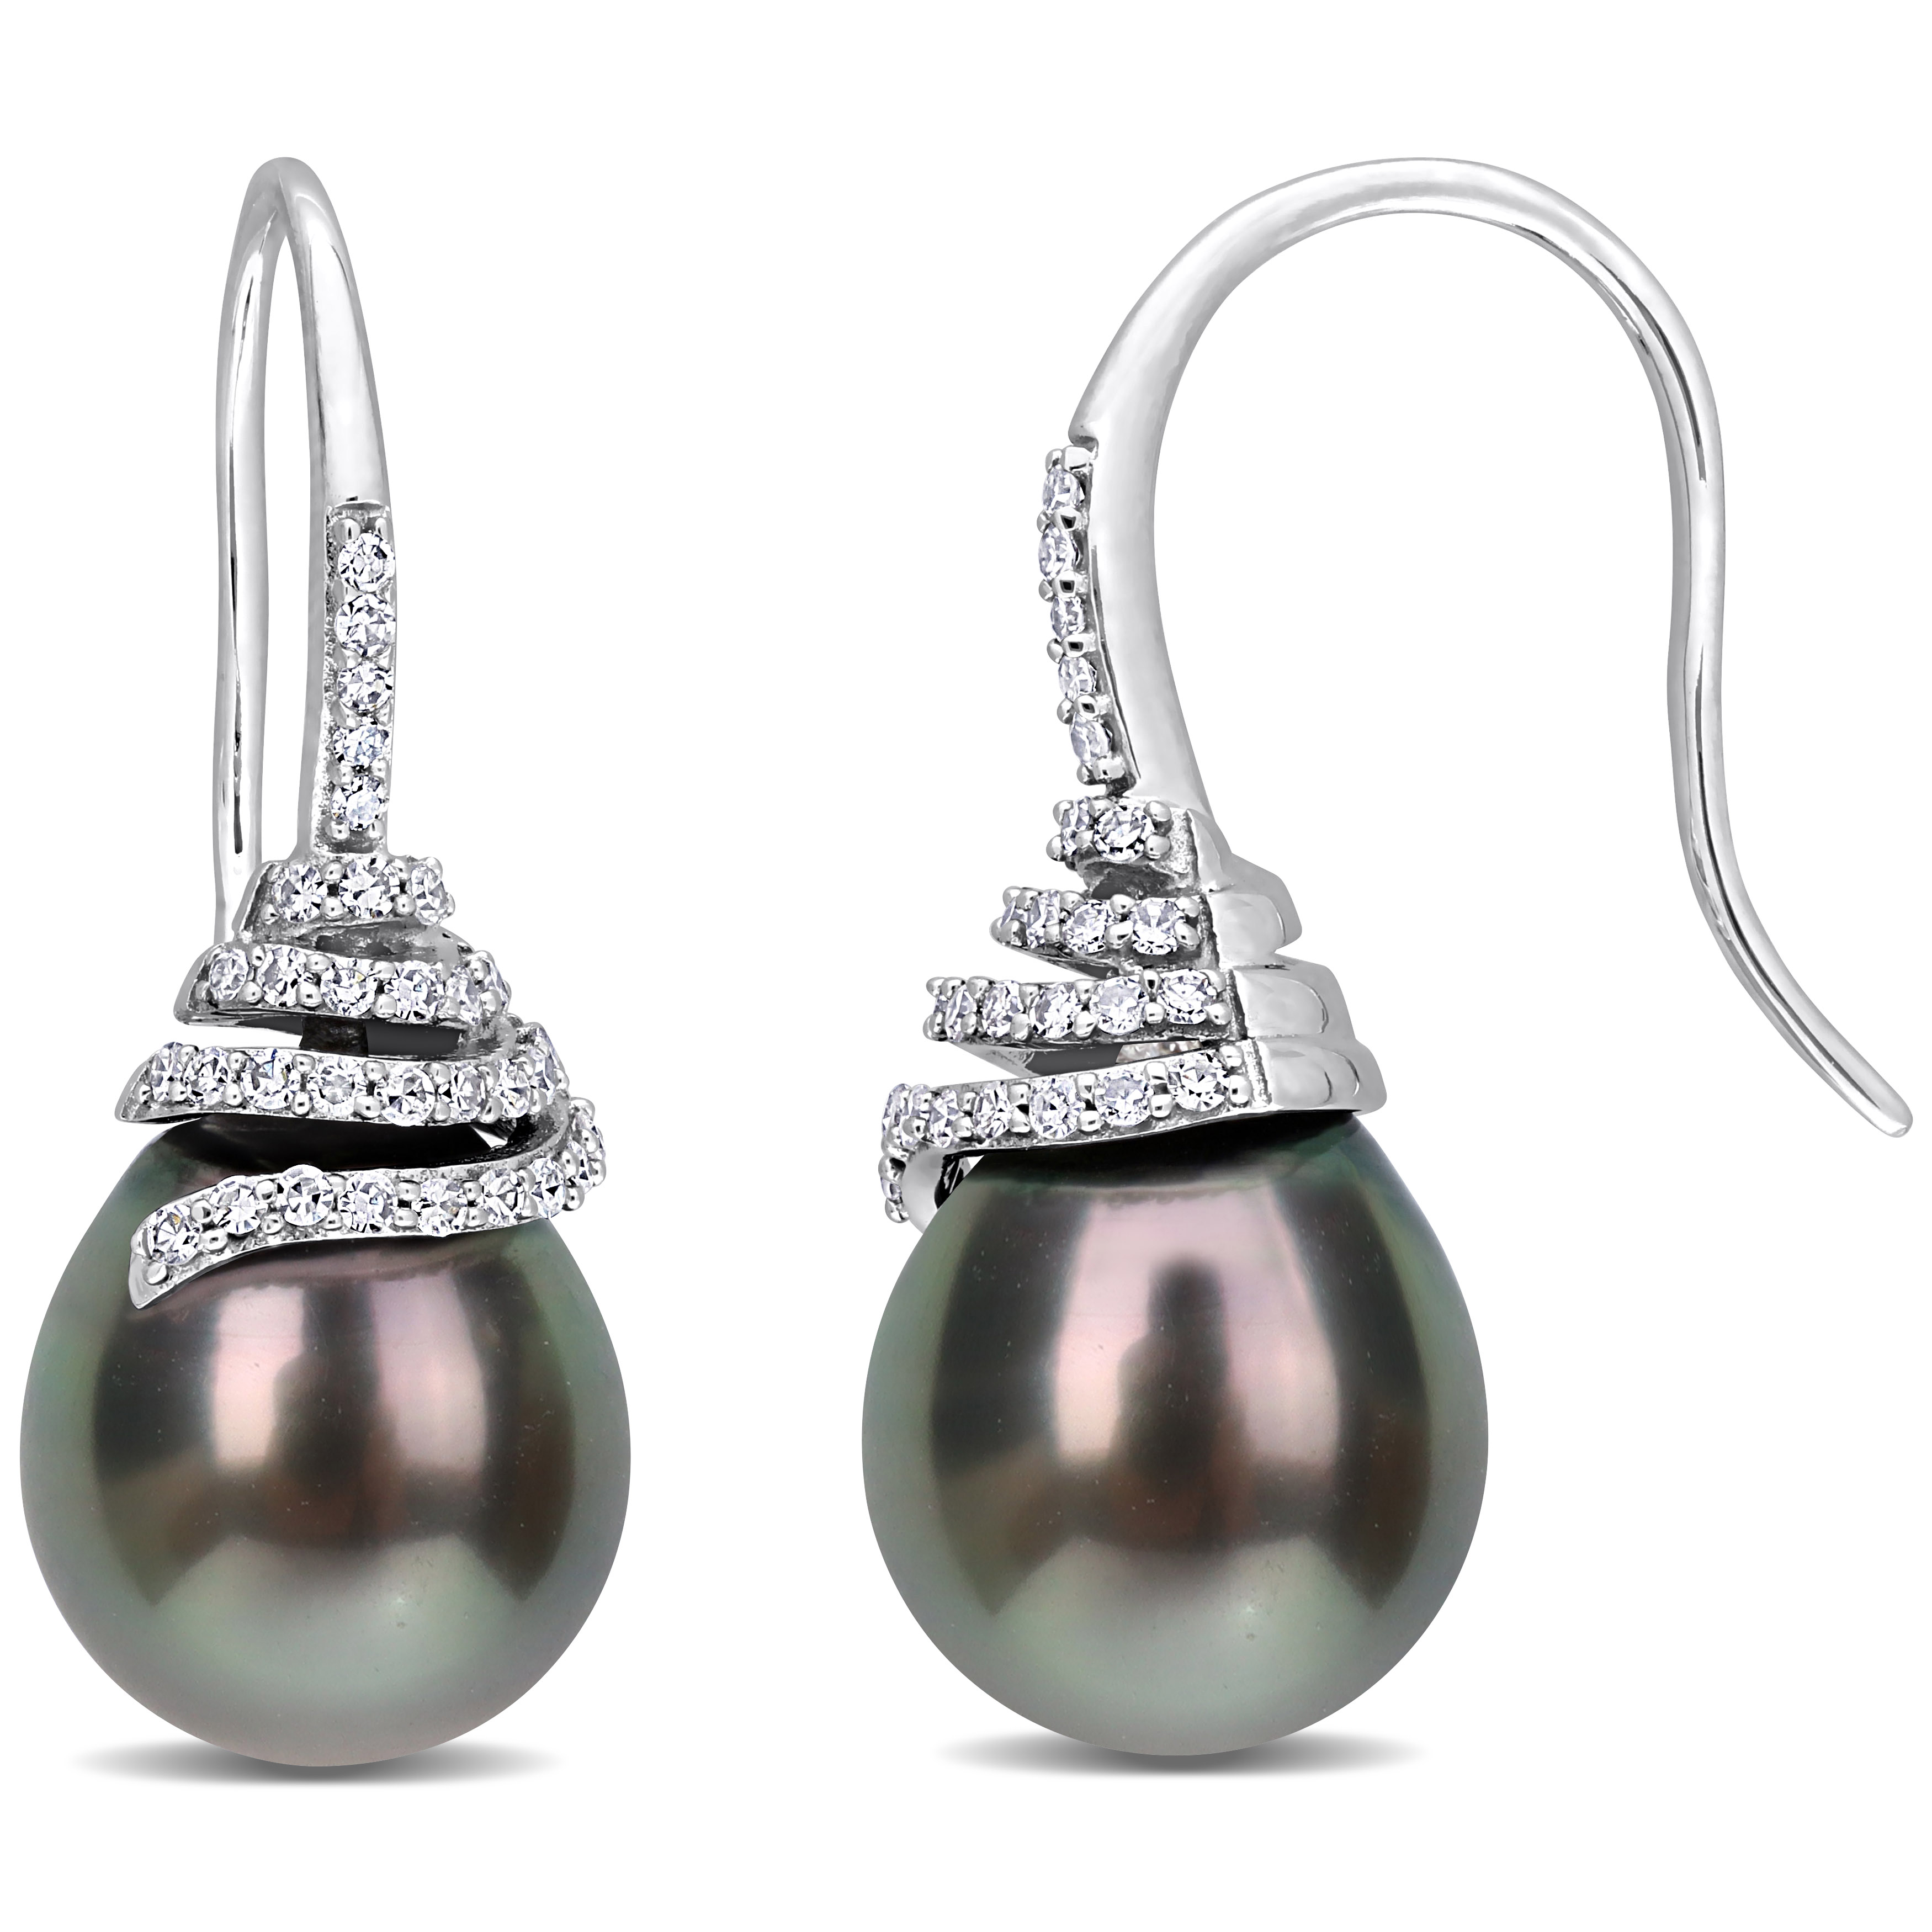 10-11 MM Black Tahitian Cultured Pearl and 1/3 CT TW Diamond Swirl Hook Earrings in 14k White Gold